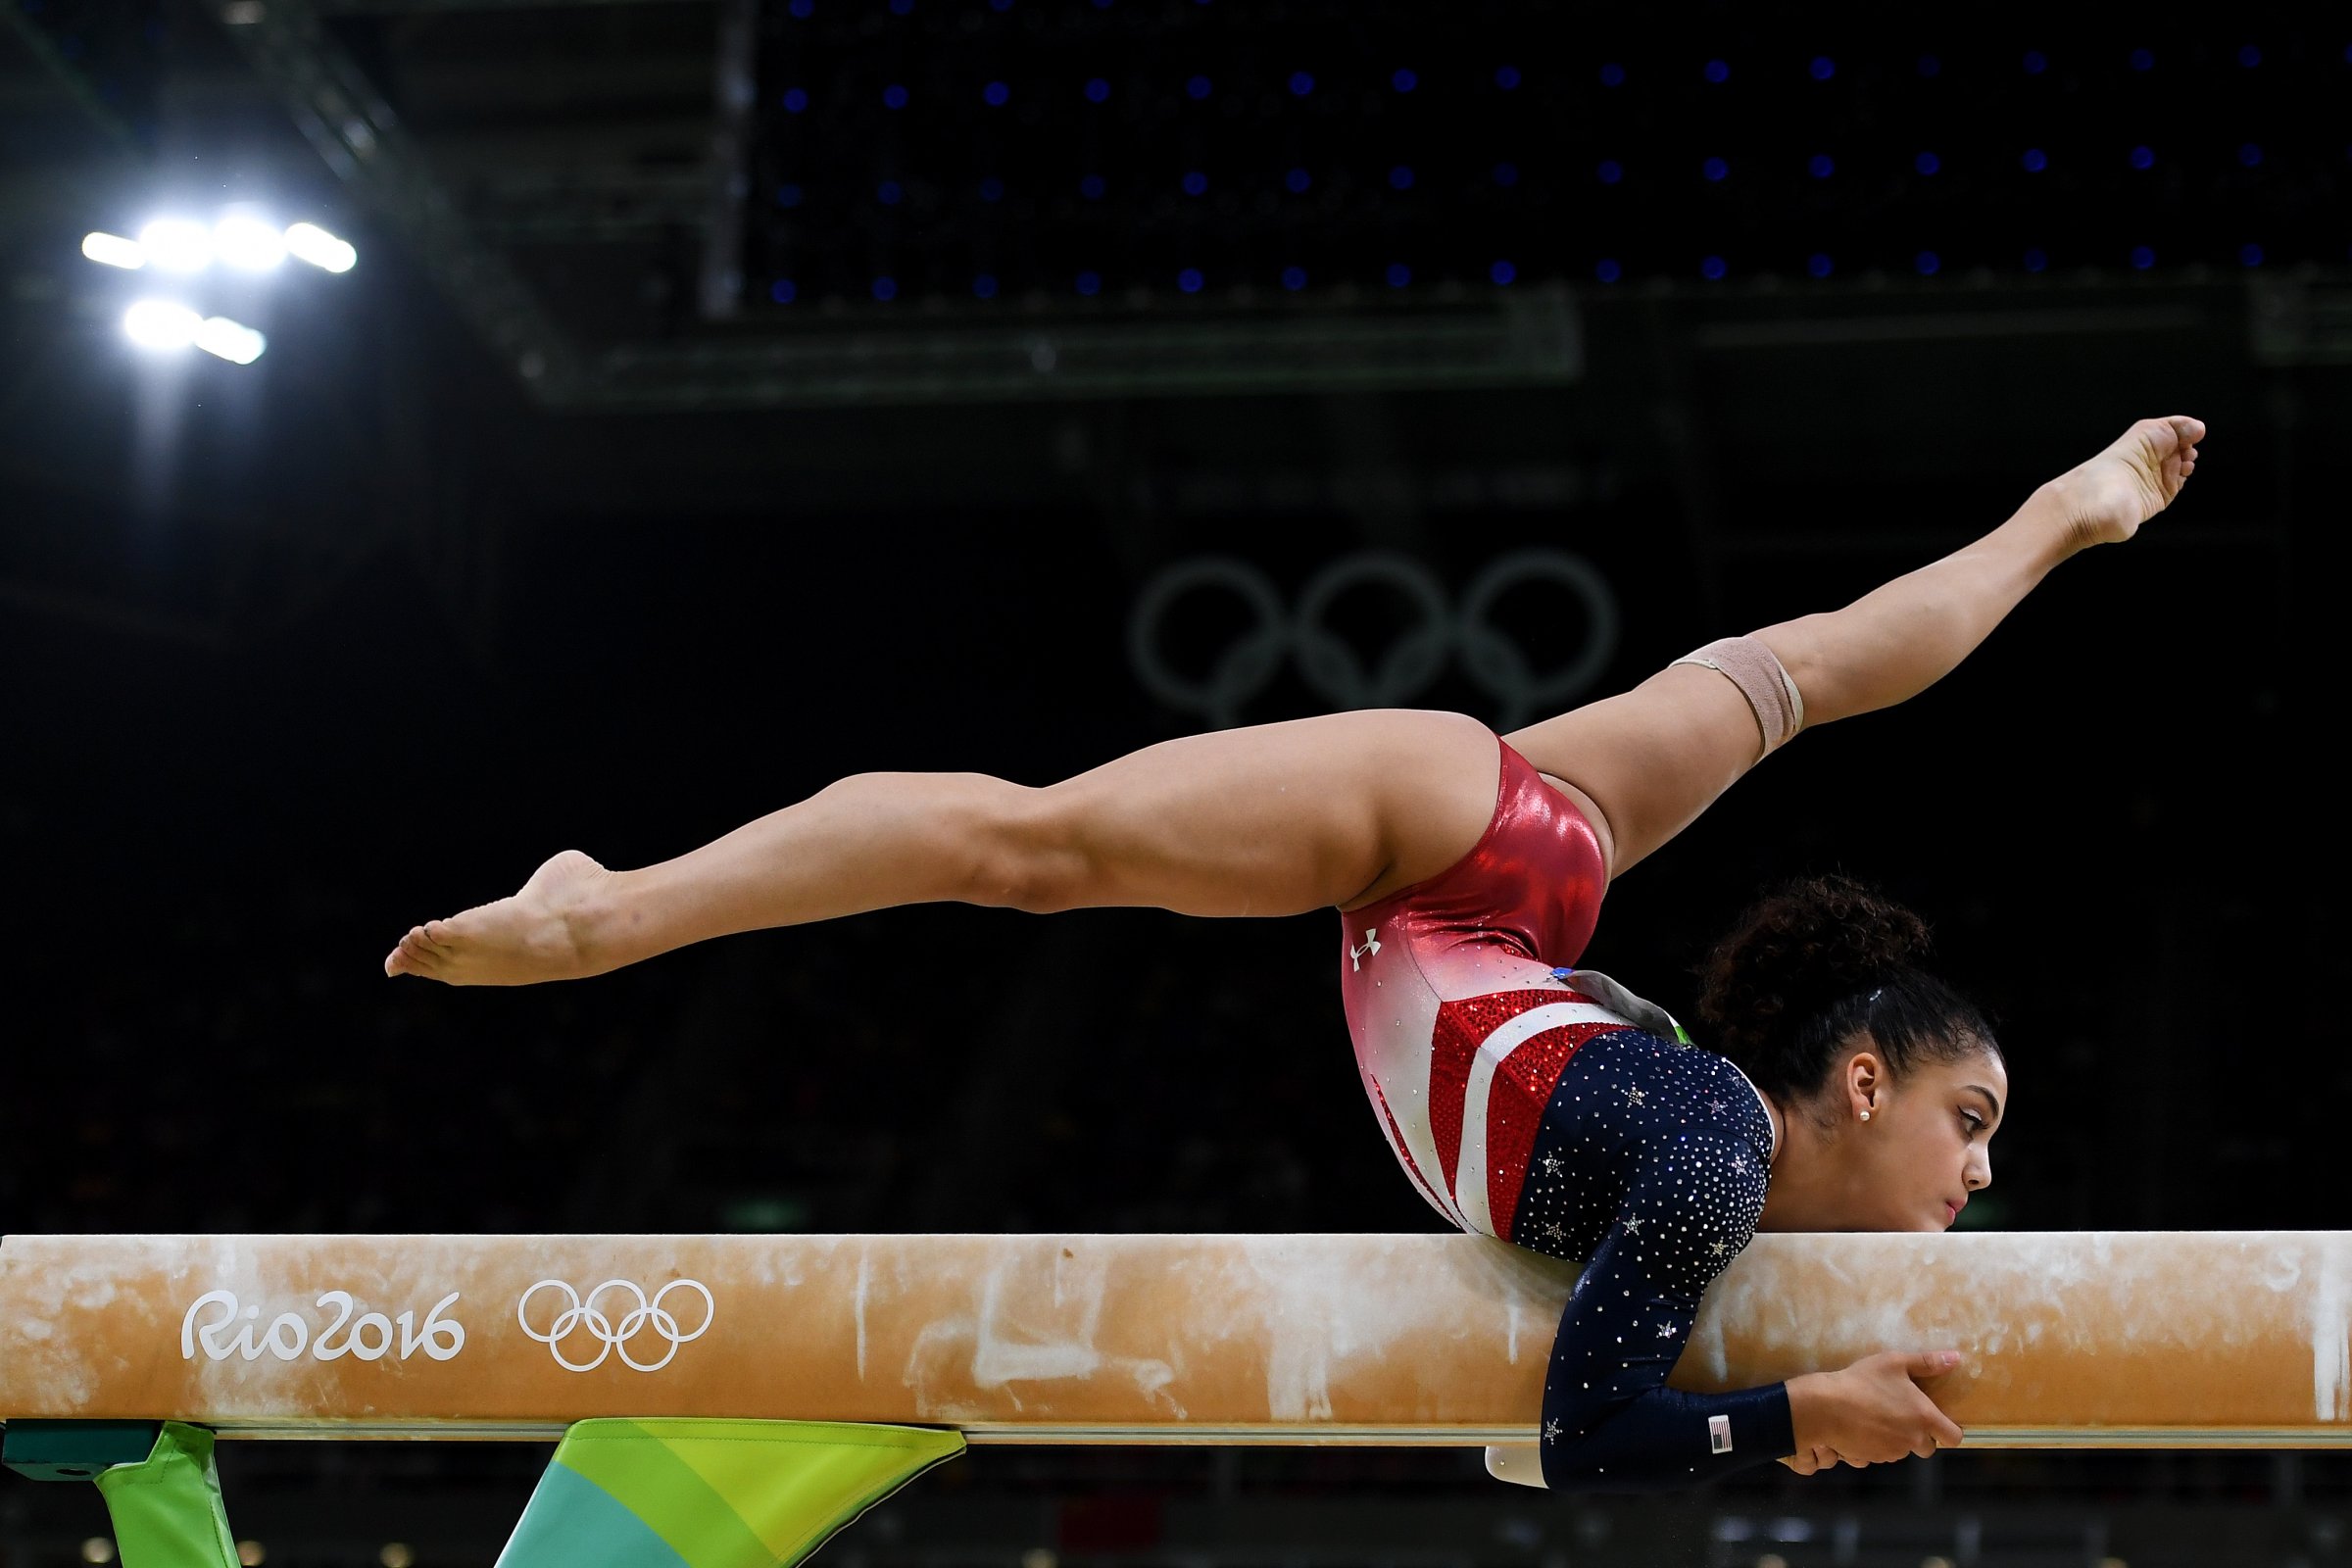 Gymnastics - Artistic - Olympics: Day 4